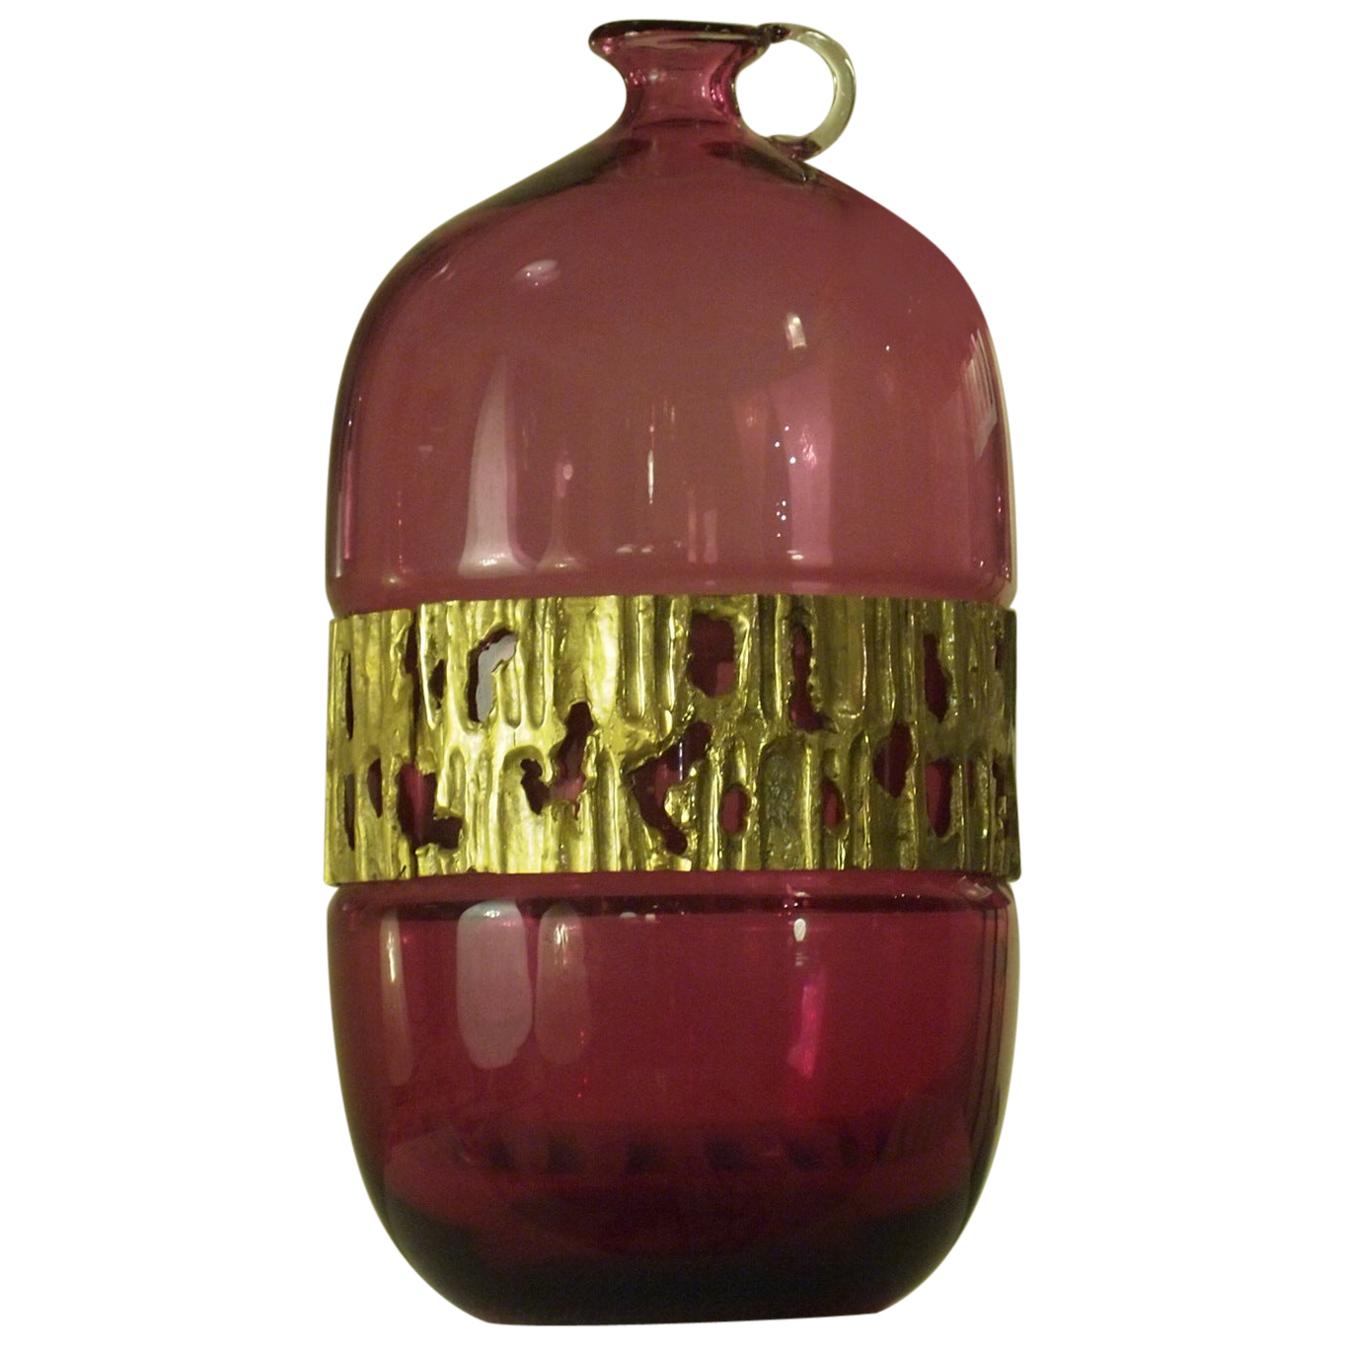 Angelo Brotto “Iside” Vase for Esperia, Italy, 1980